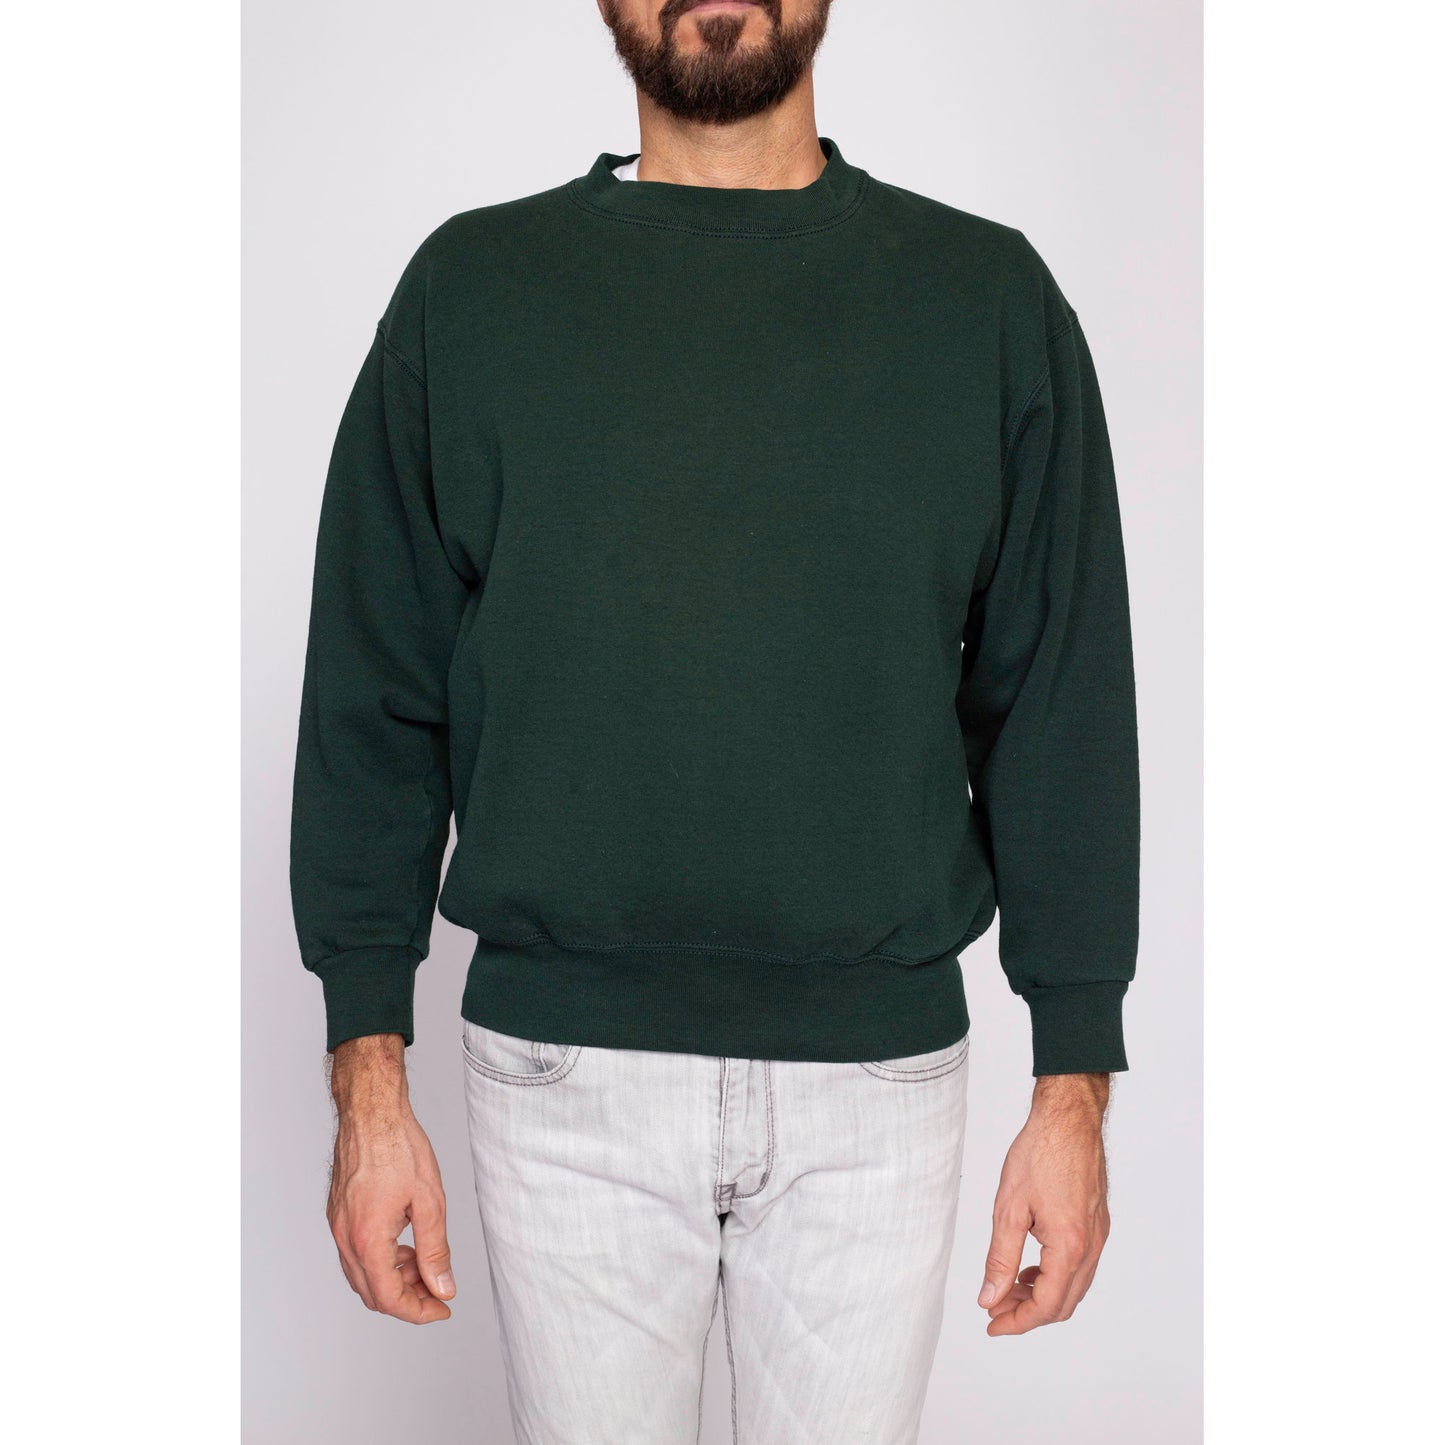 90s Dark Green Crewneck Sweatshirt - Men's Medium | Vintage Fruit Of The Loom Unisex Plain Pullover